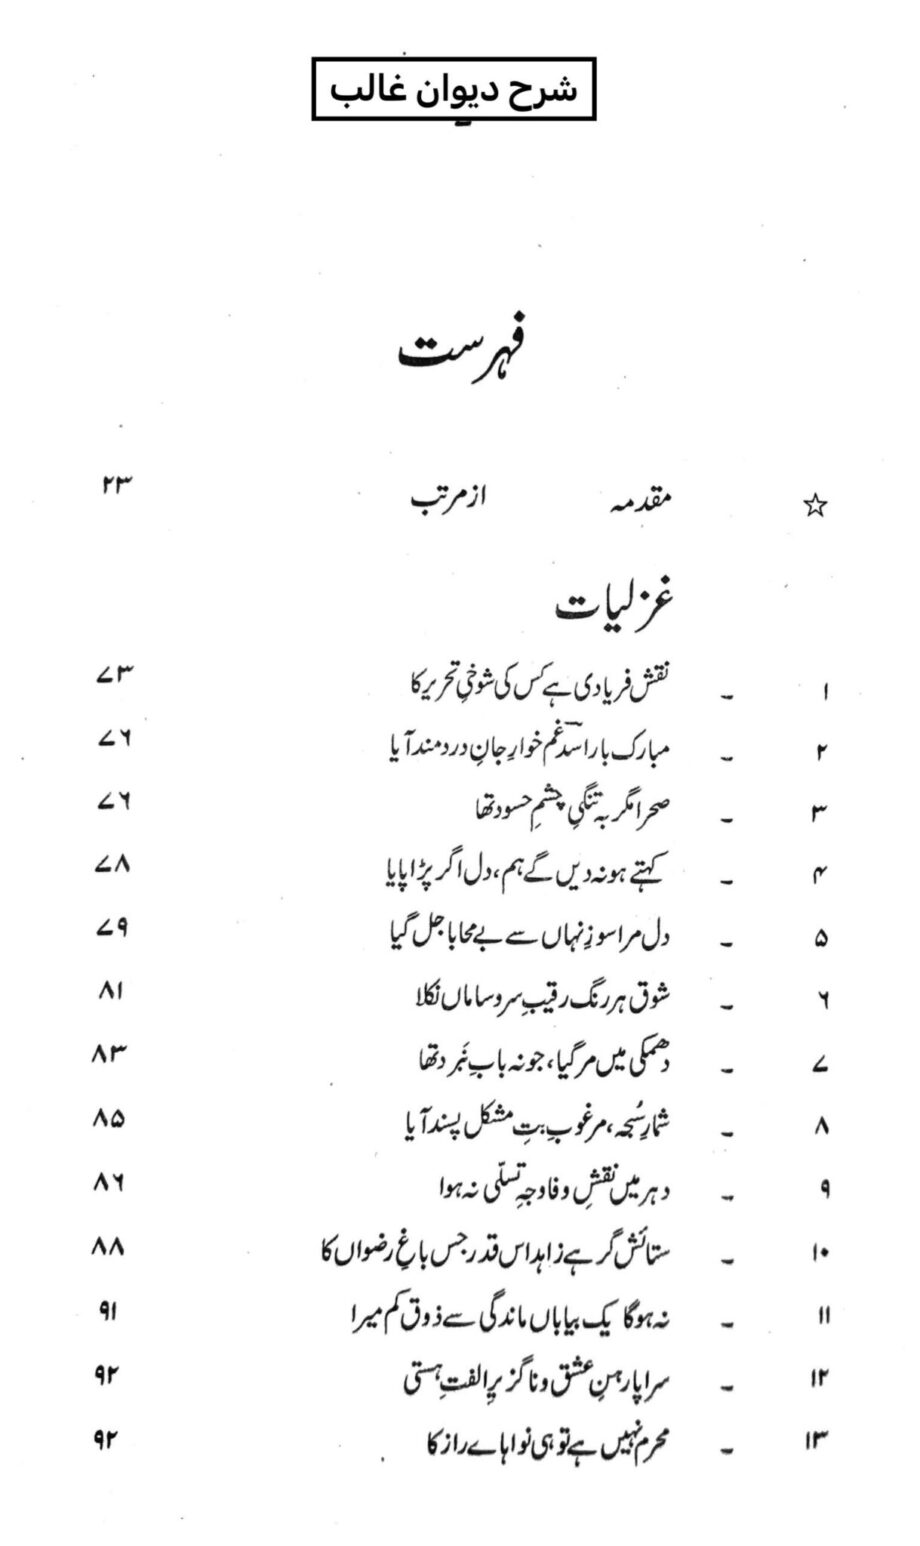 Mirza Asadullah Khan Ghalib poetry kitabfarosh